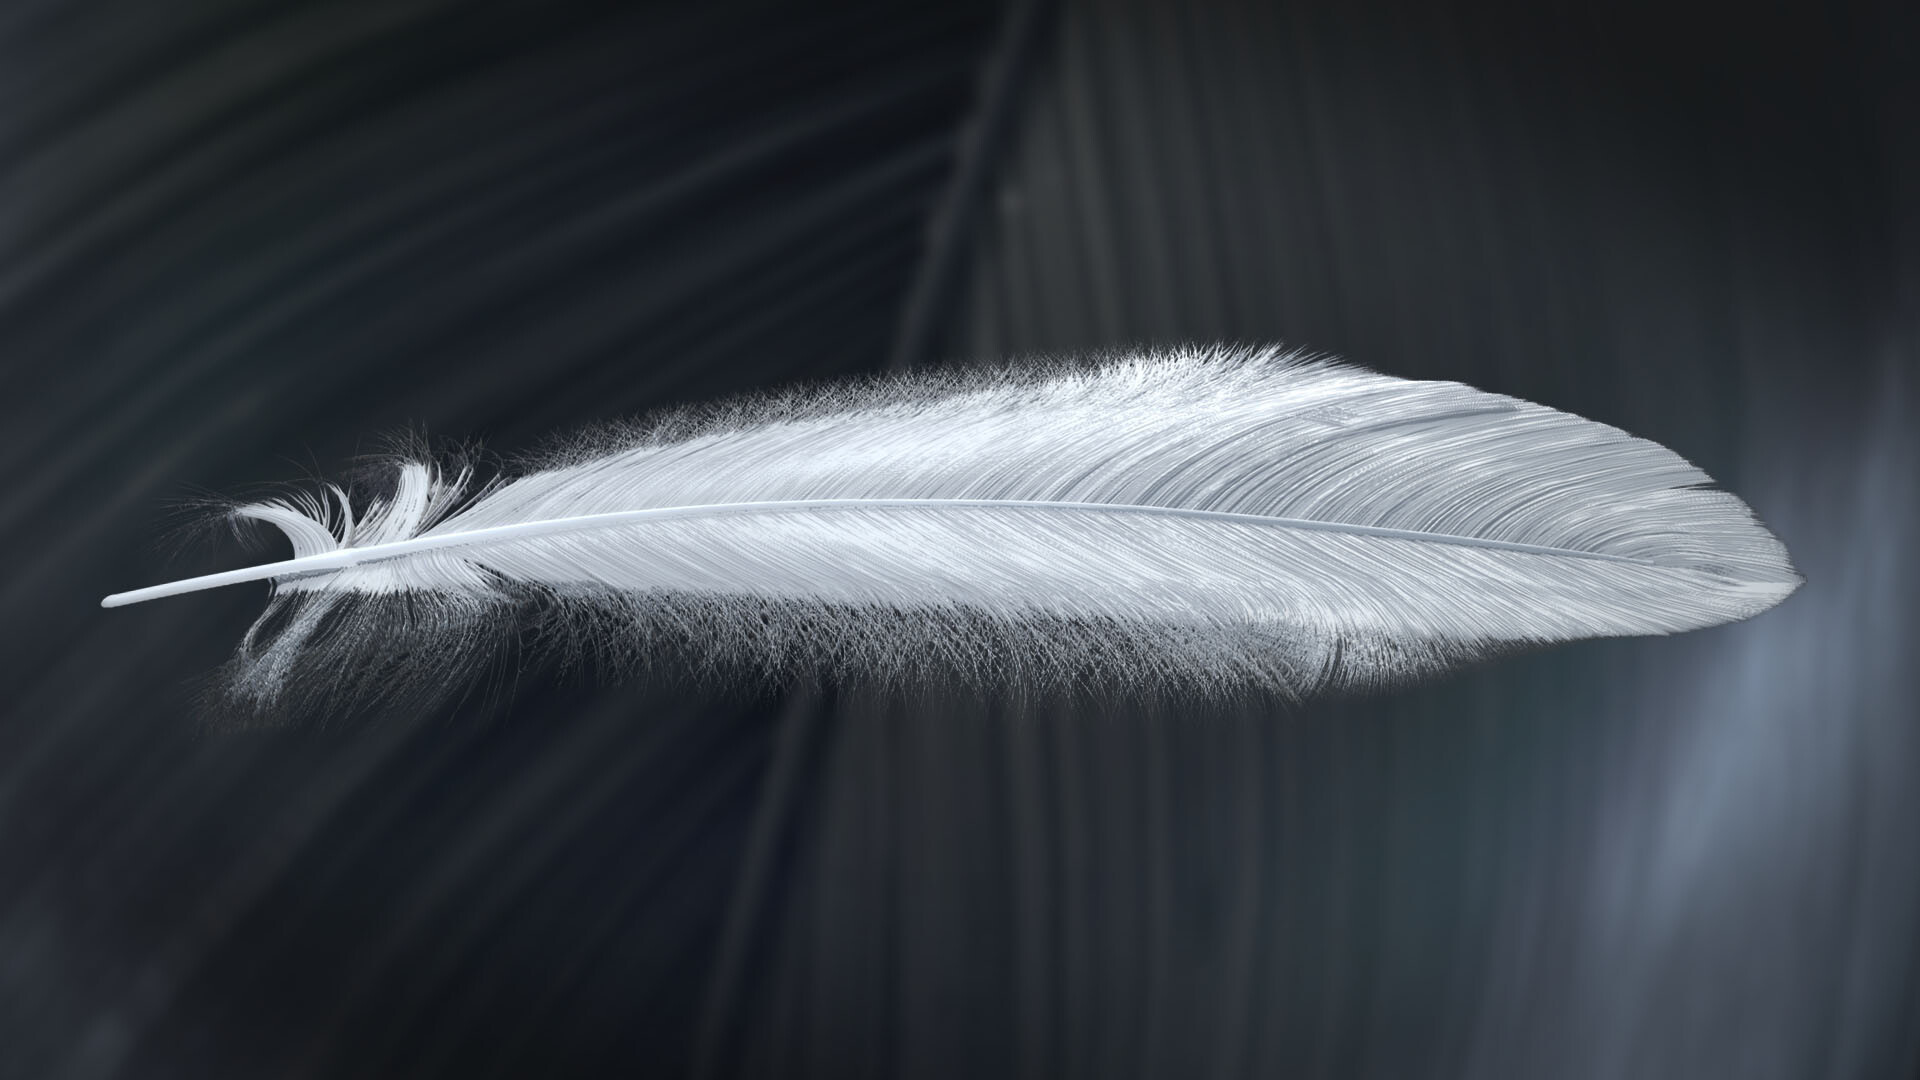 Feather: A part of bird's anatomy, Filoplume. 1920x1080 Full HD Wallpaper.